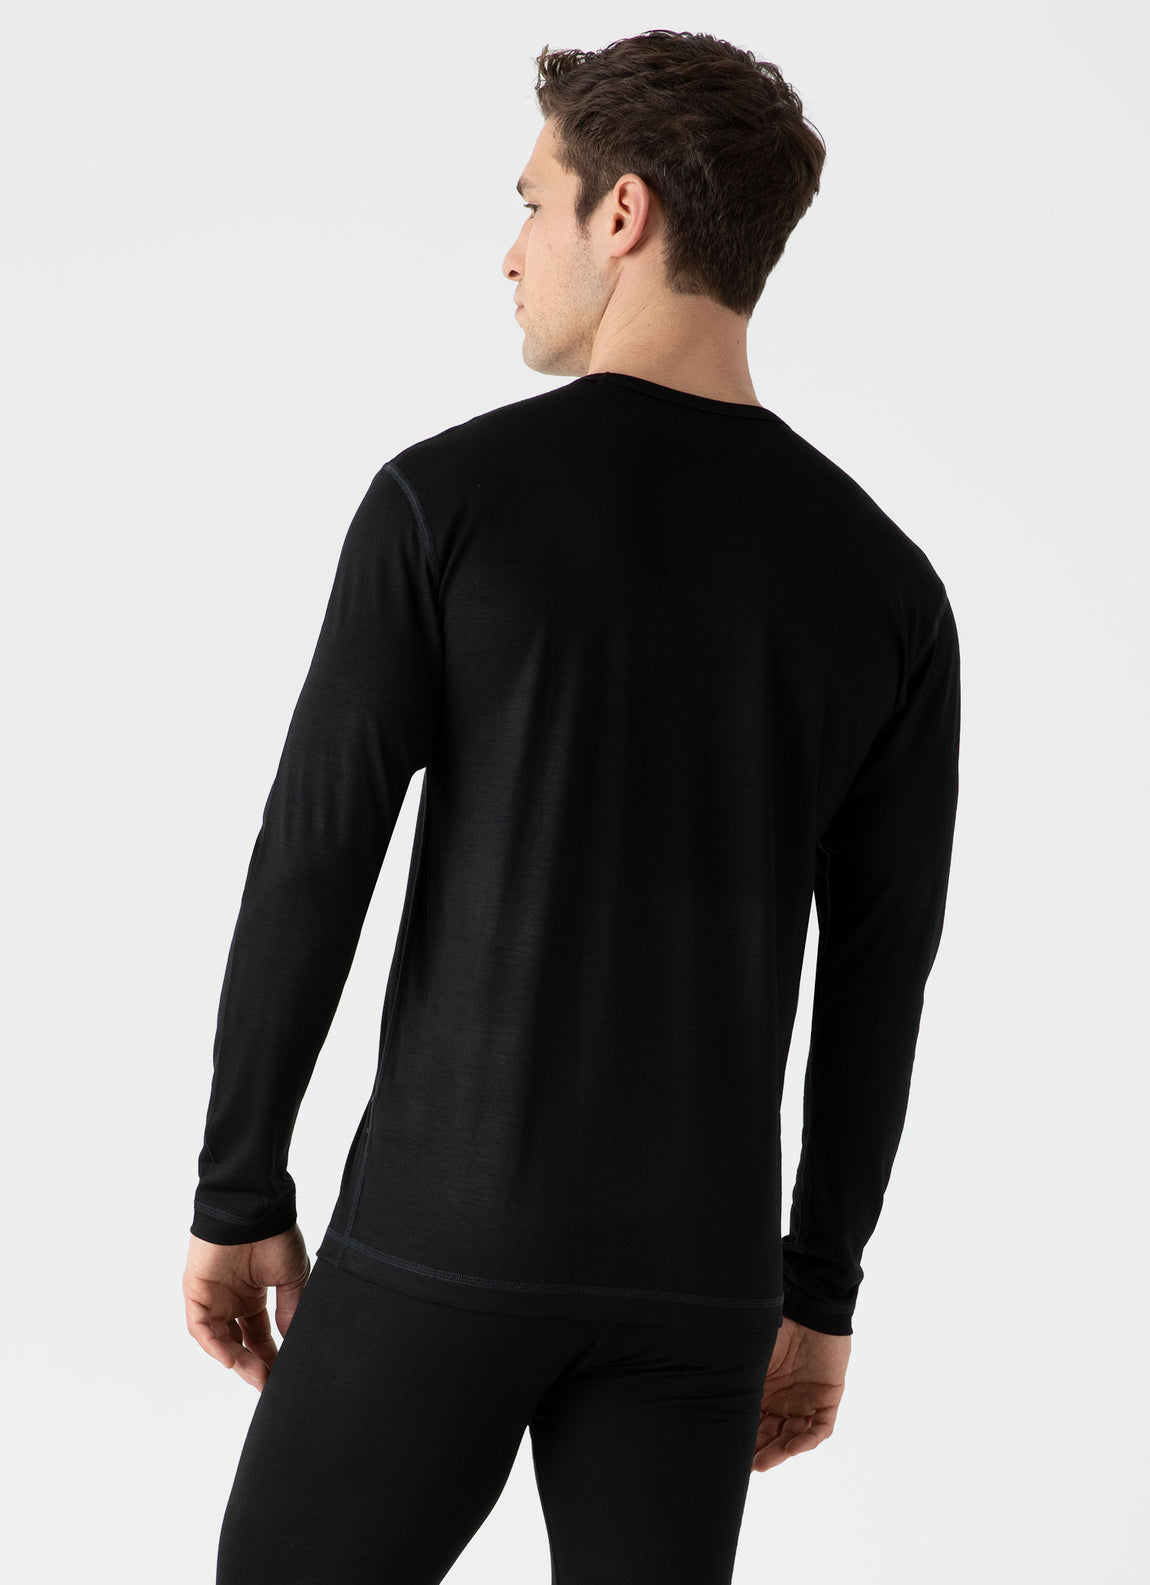 Men's Merino Long Sleeve Base Layer in Black